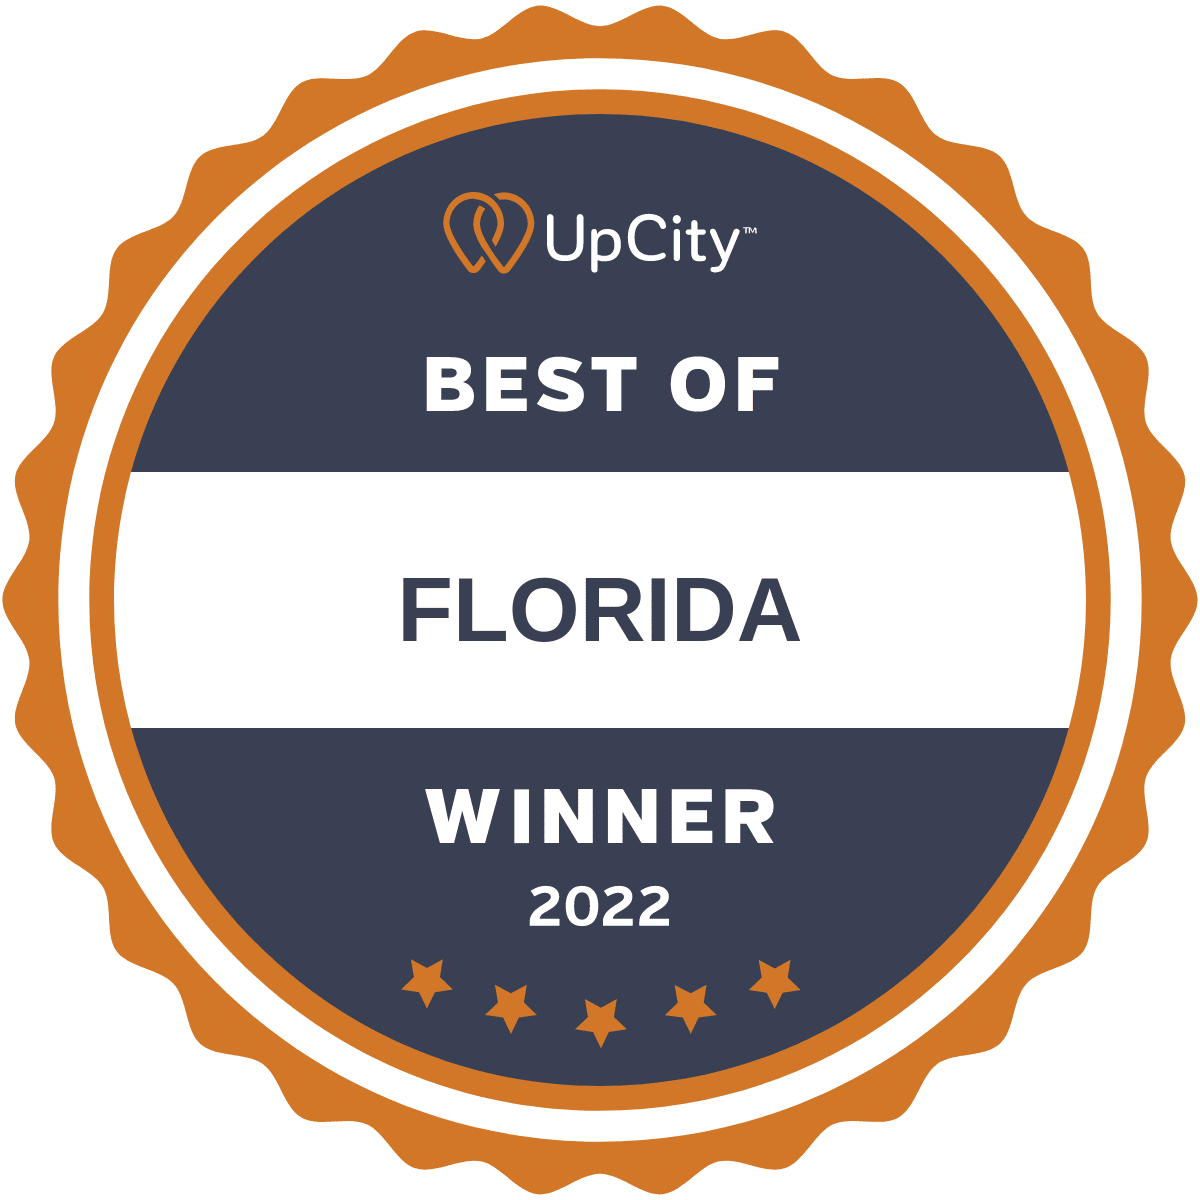 Best of florida winner 2022